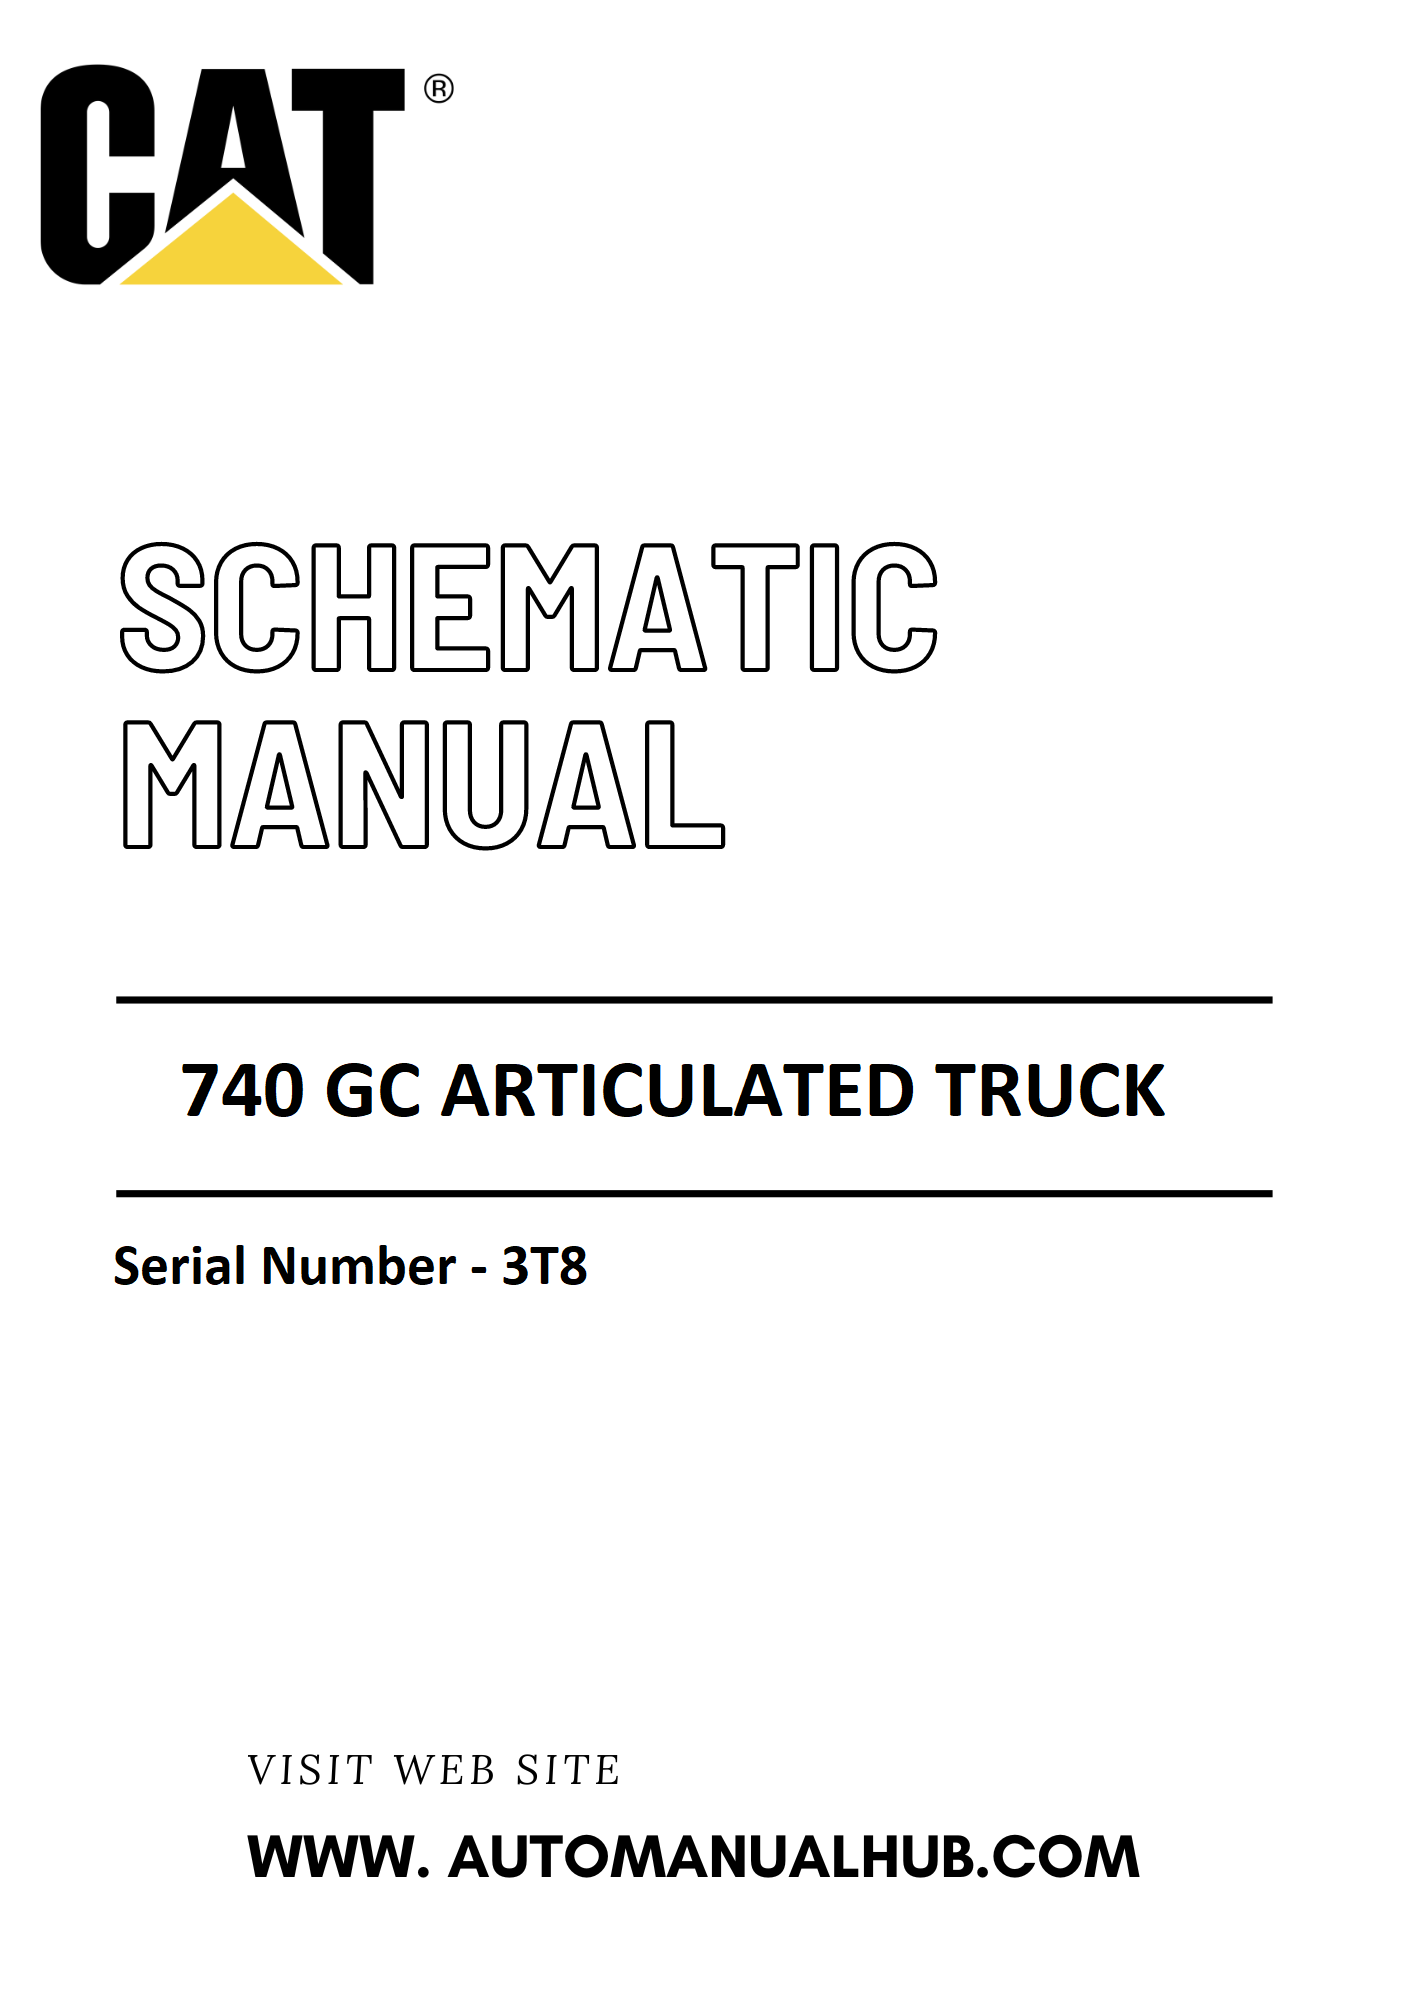 Cat Caterpillar 740 GC Articulated Truck Schematic Diagram Manual Serial Number - 3T8 PDF Download